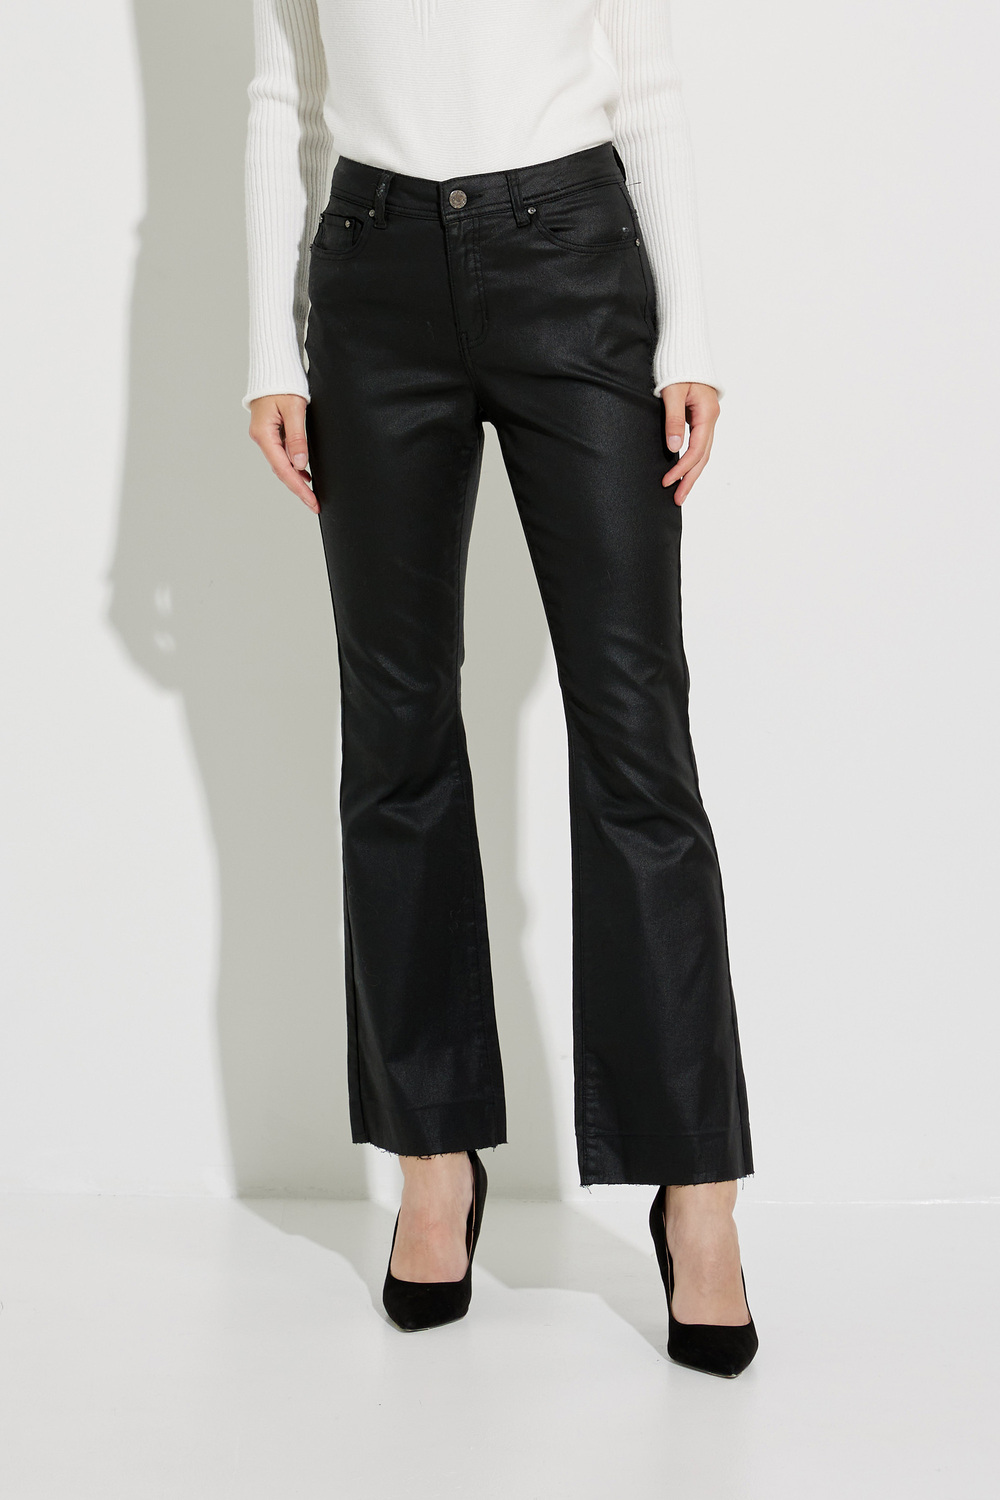 Denim Flare Pants Style C5368. Black